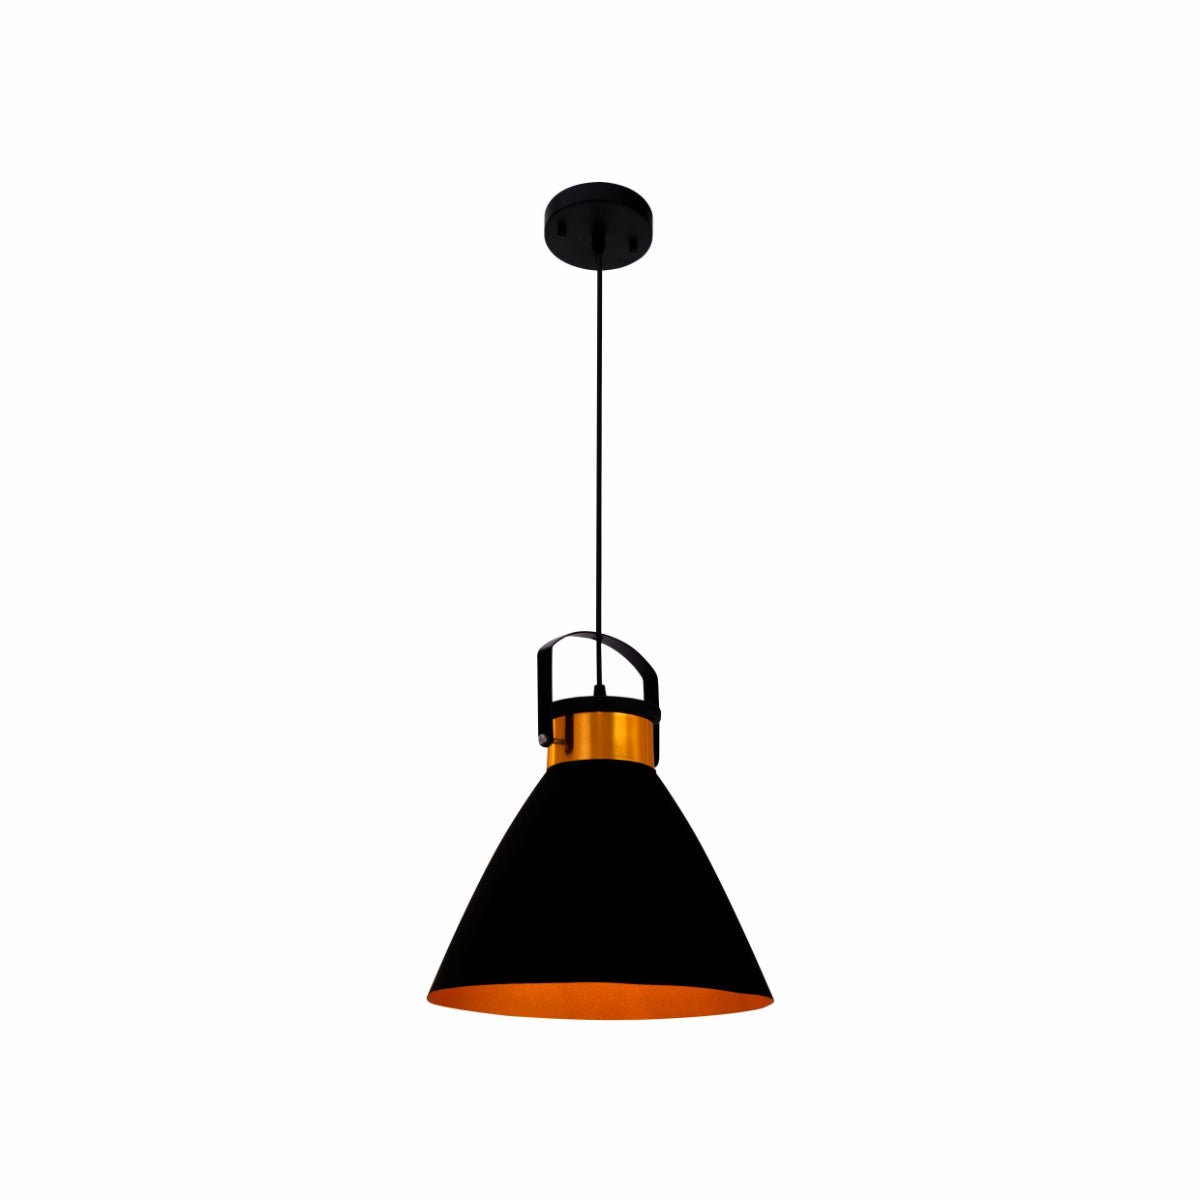 Main image of Black Gold Funnel Modern Metal Ceiling Pendant Light with E27 Fitting | TEKLED 150-18112